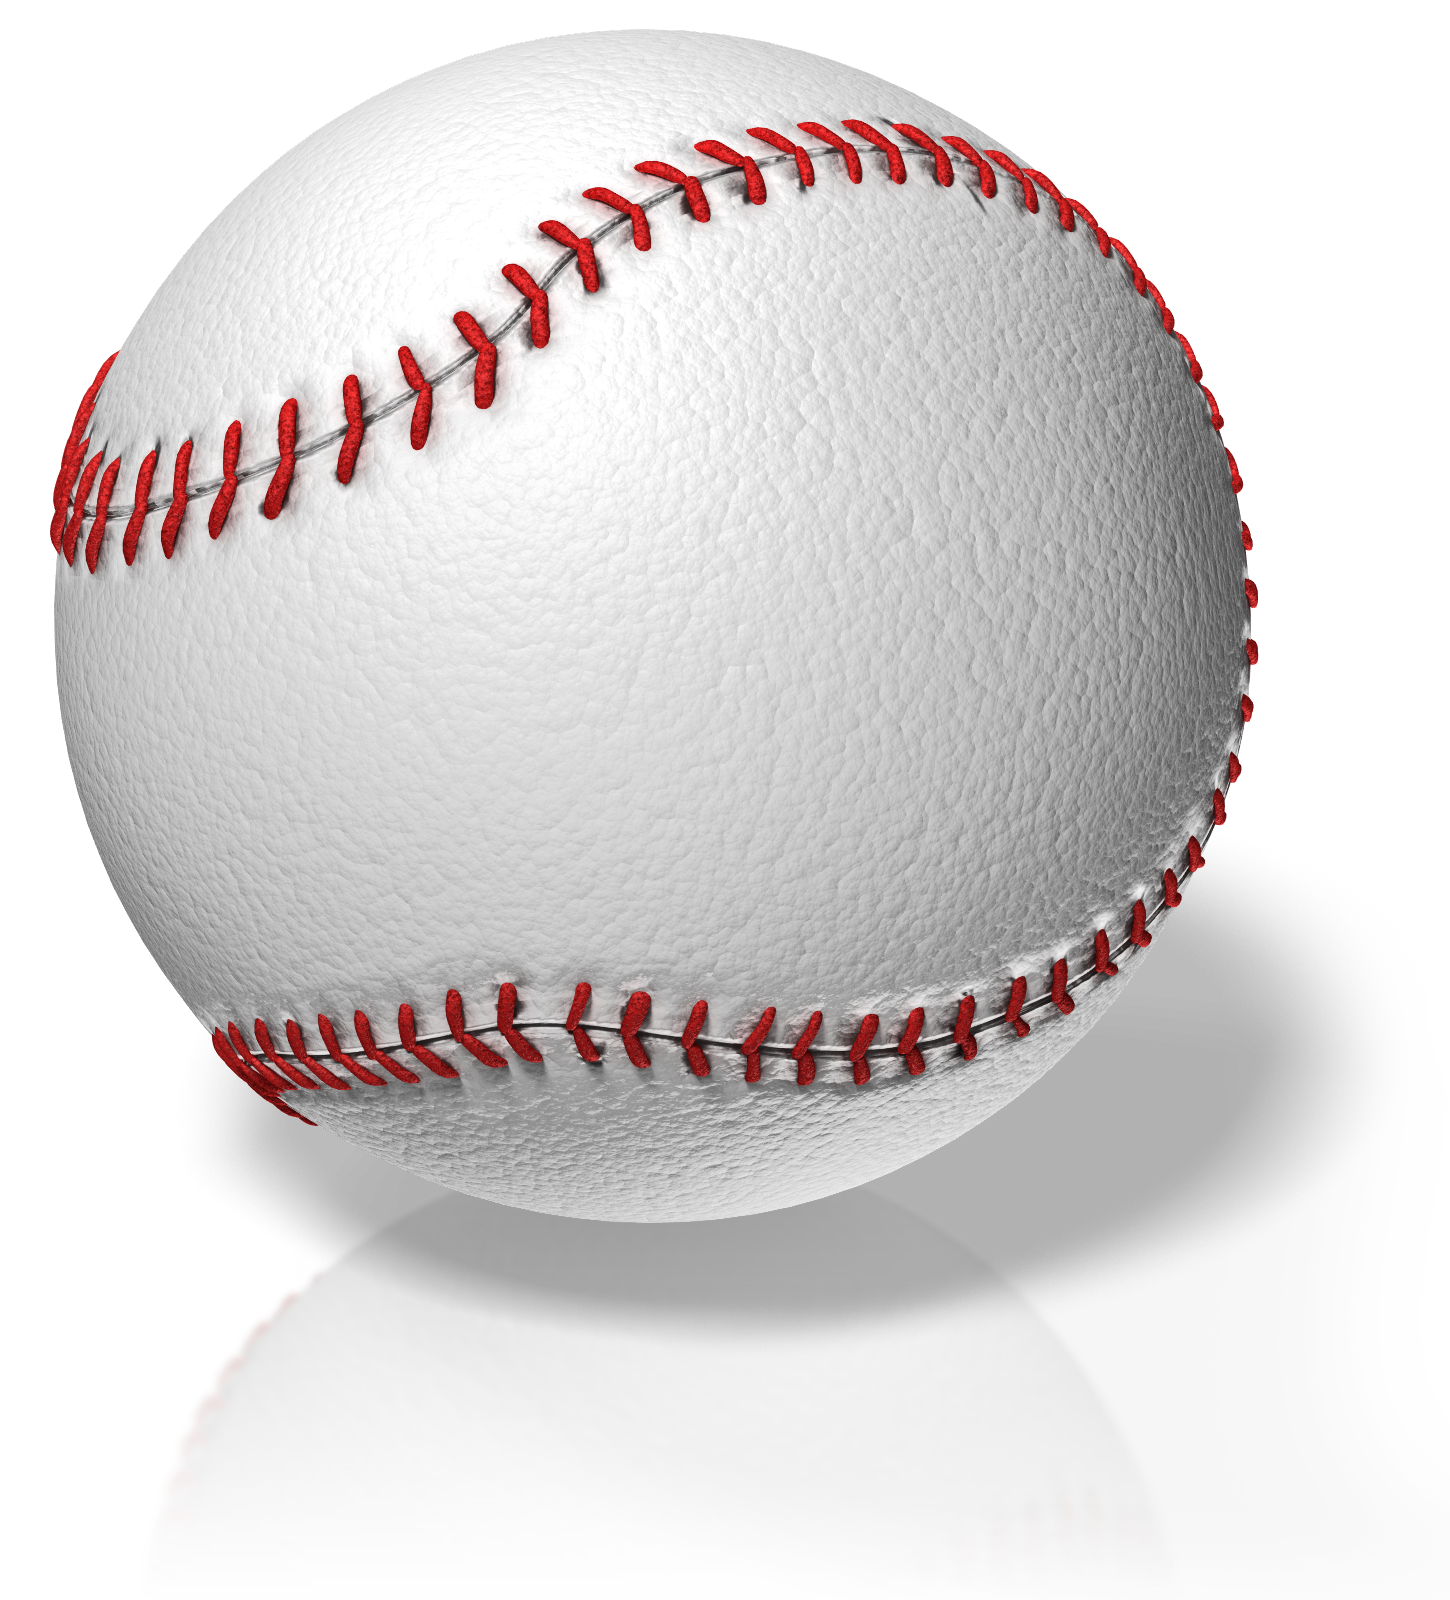 Baseball Png Baseball Image Transparent Clipart Image 35355 1450 